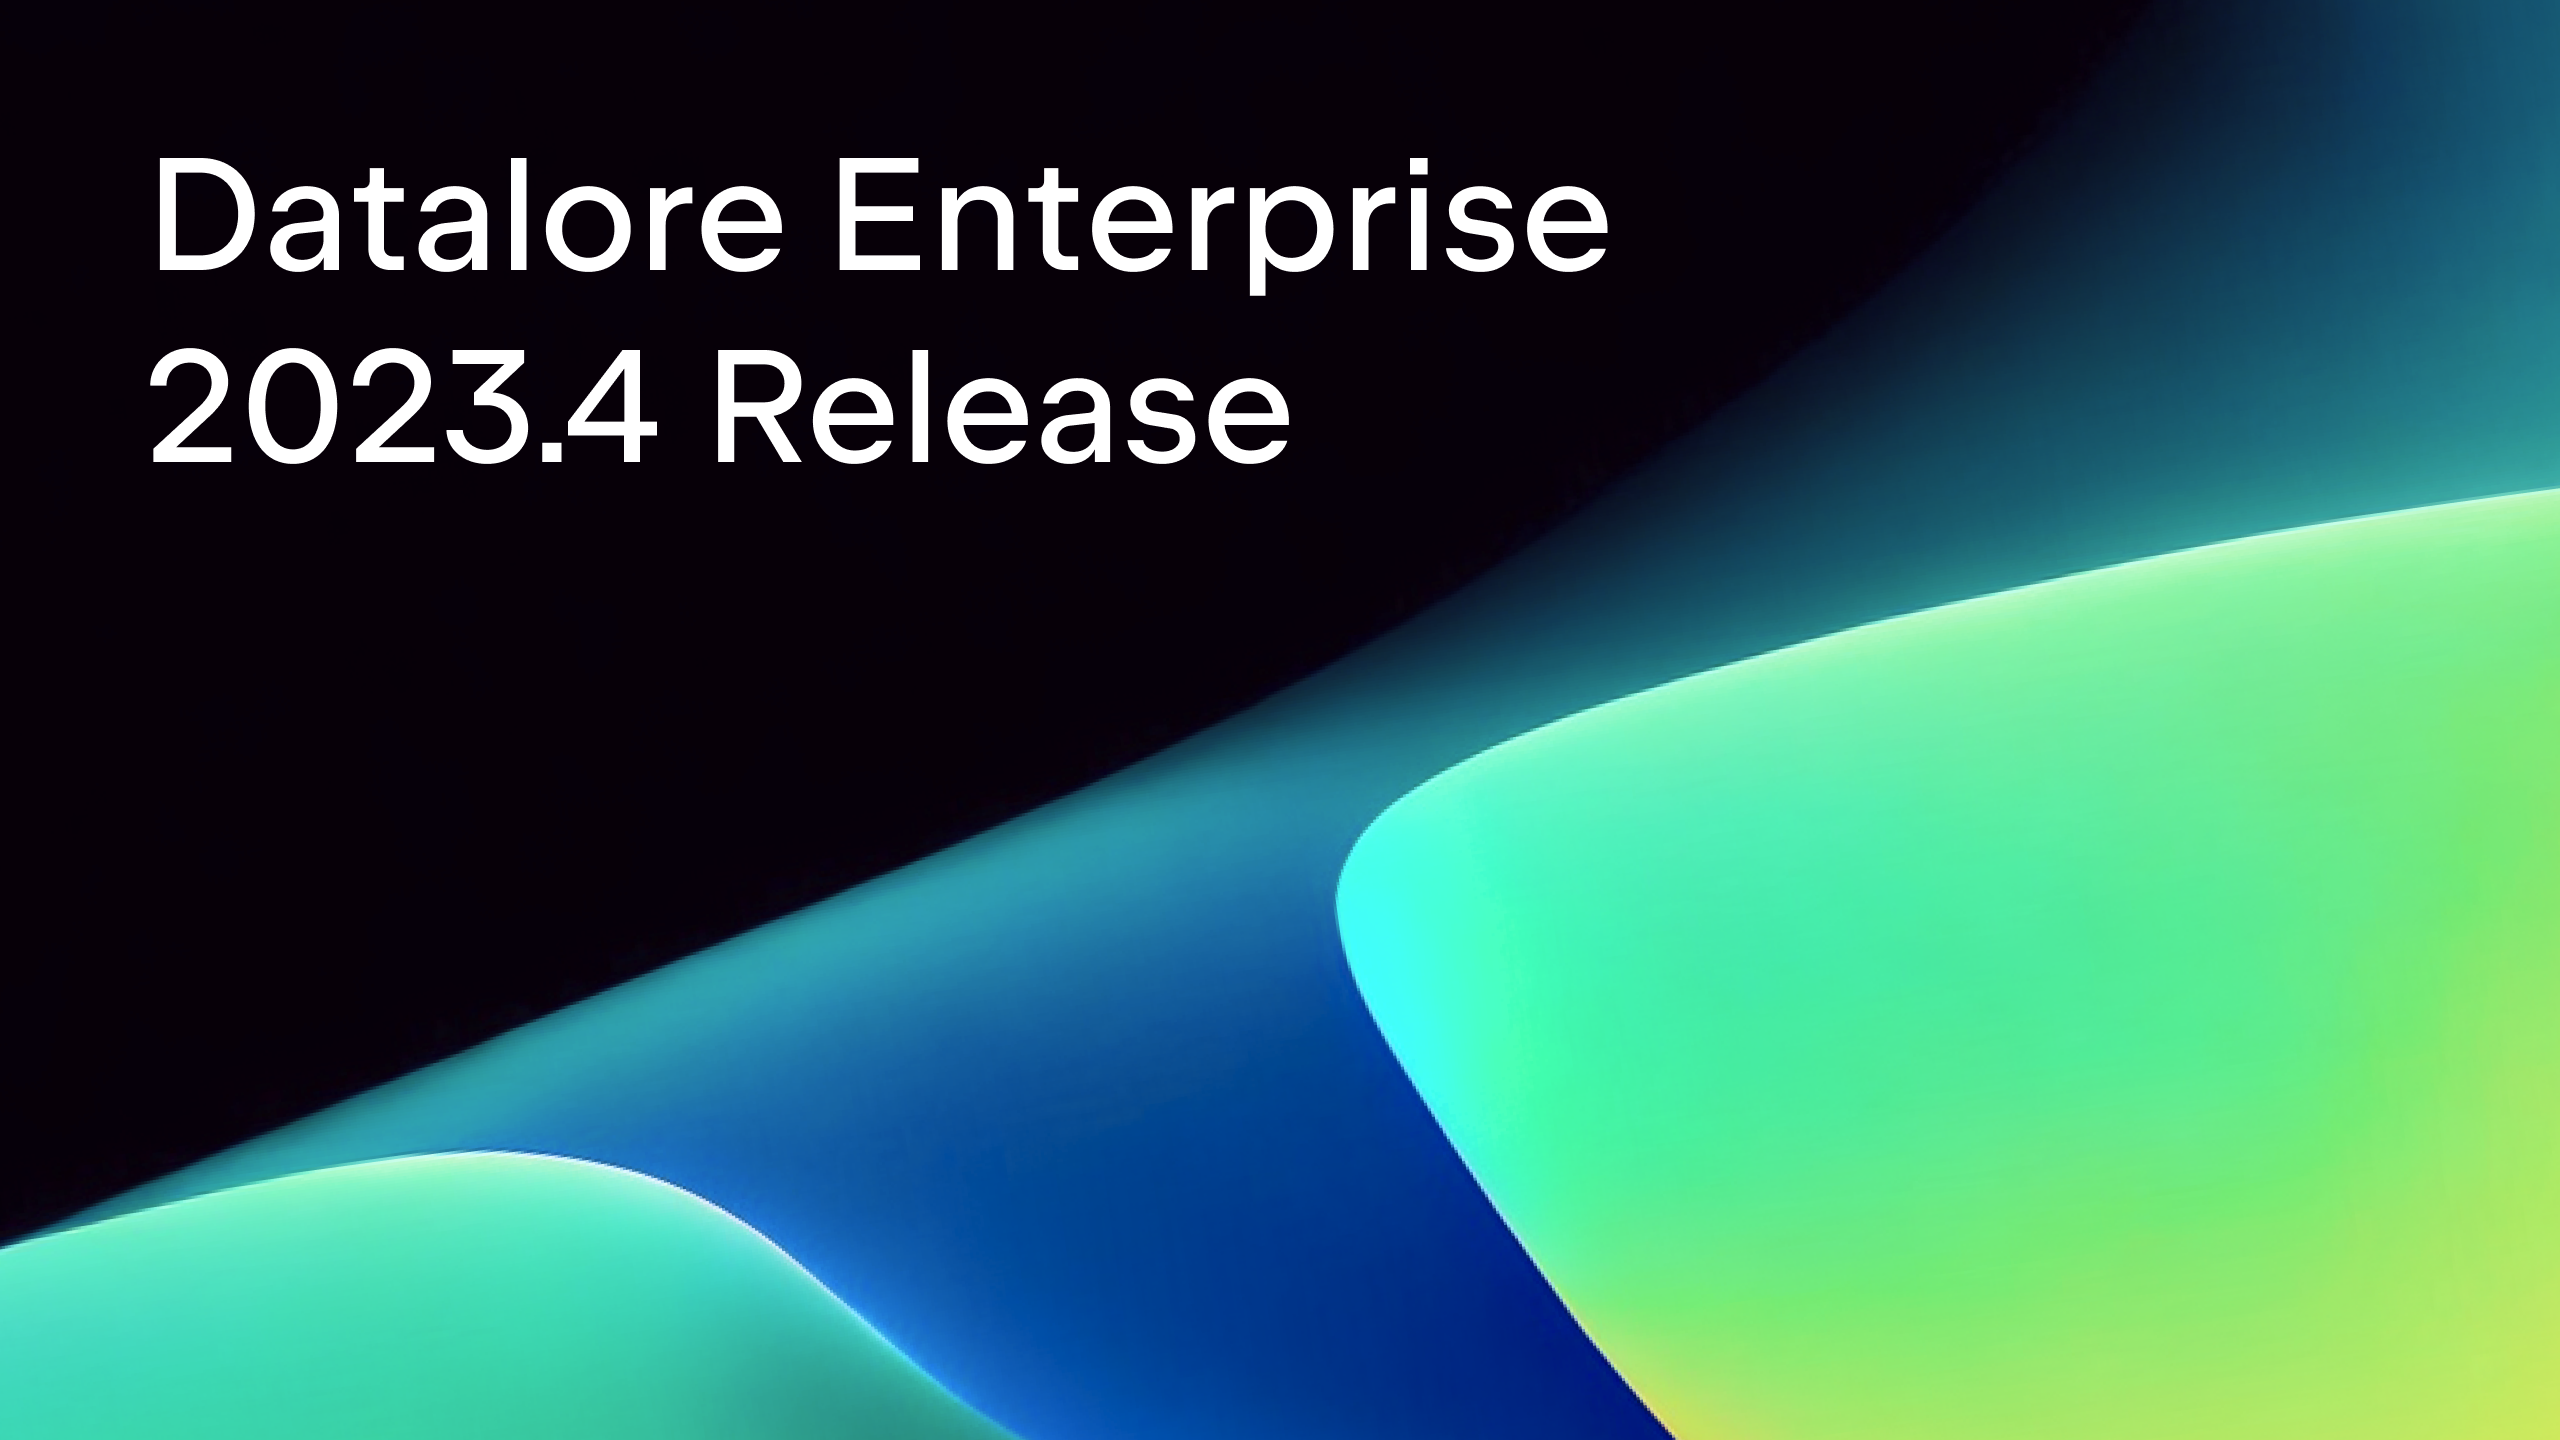 Datalore Enterprise release 2023.4